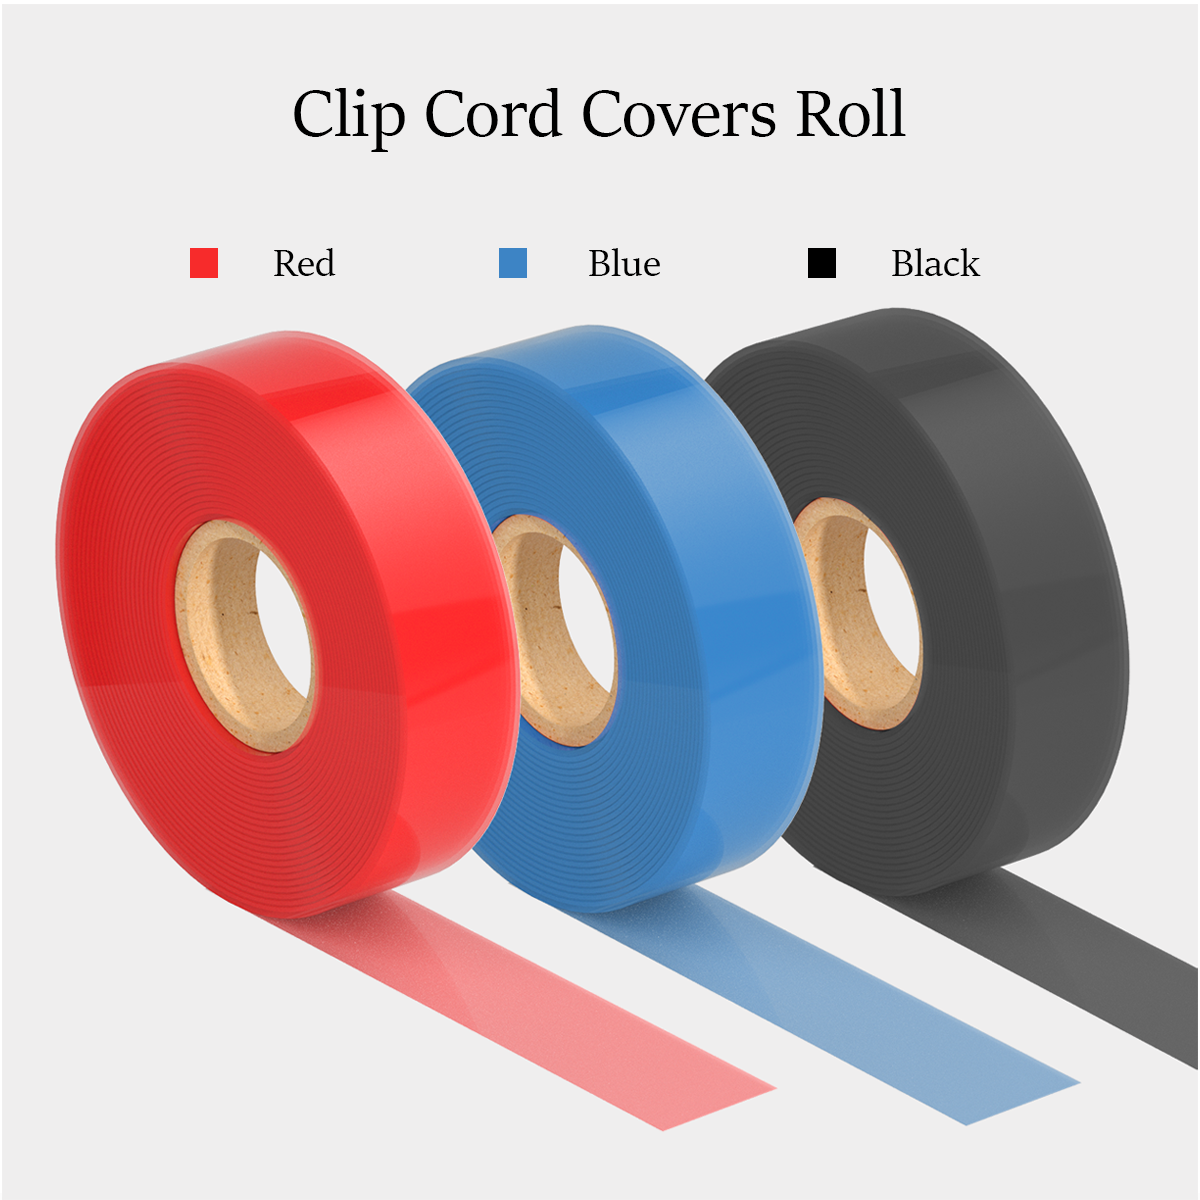 JOSI Tattoo Clip Cord Covers Roll 300M